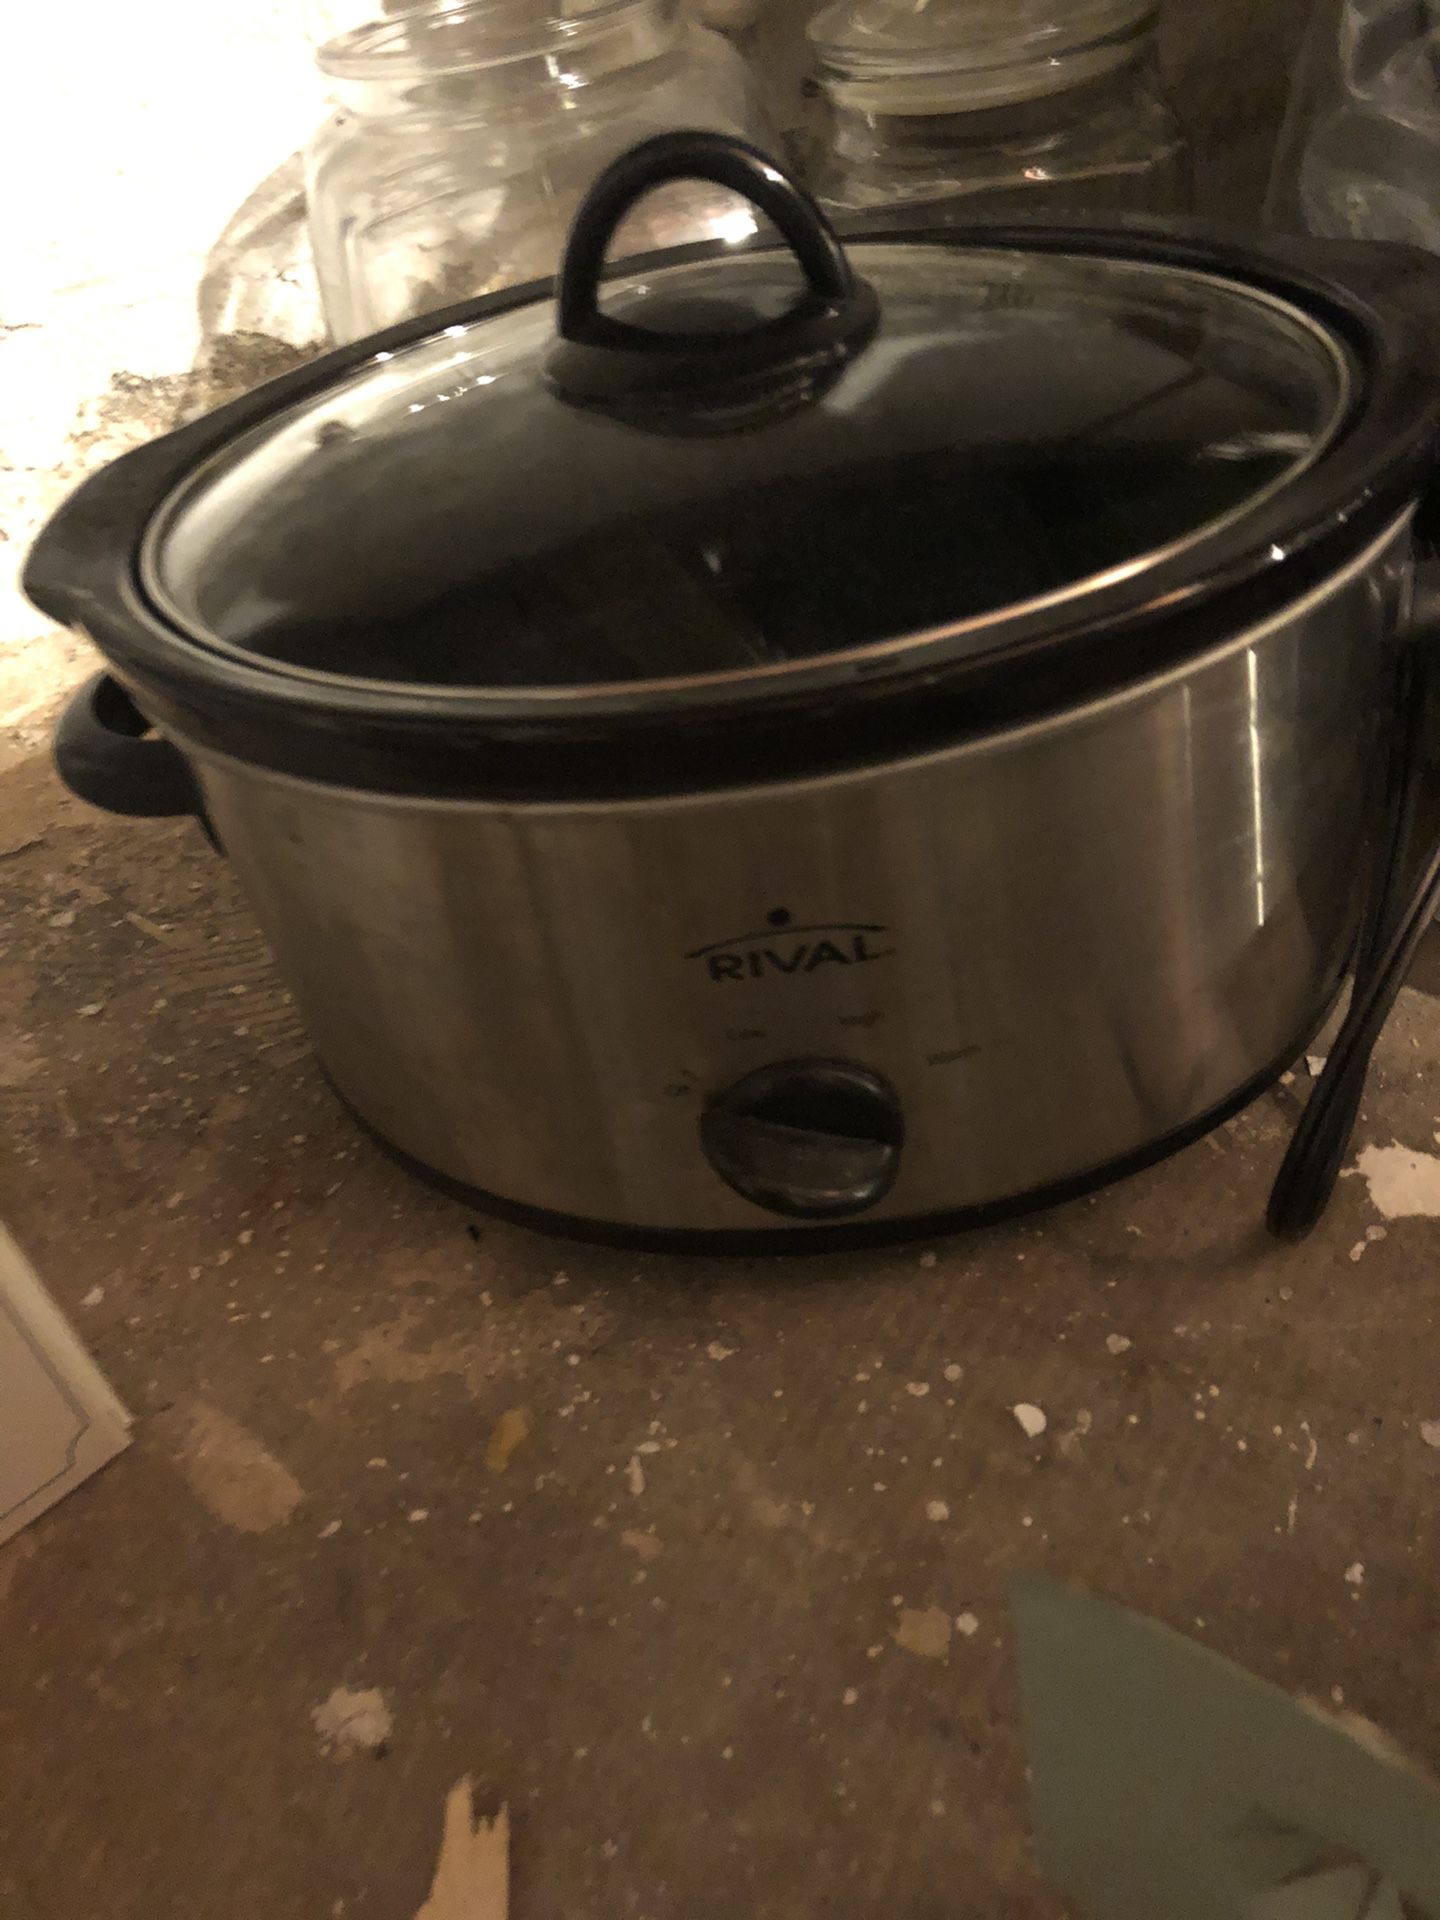 Small family crock pot